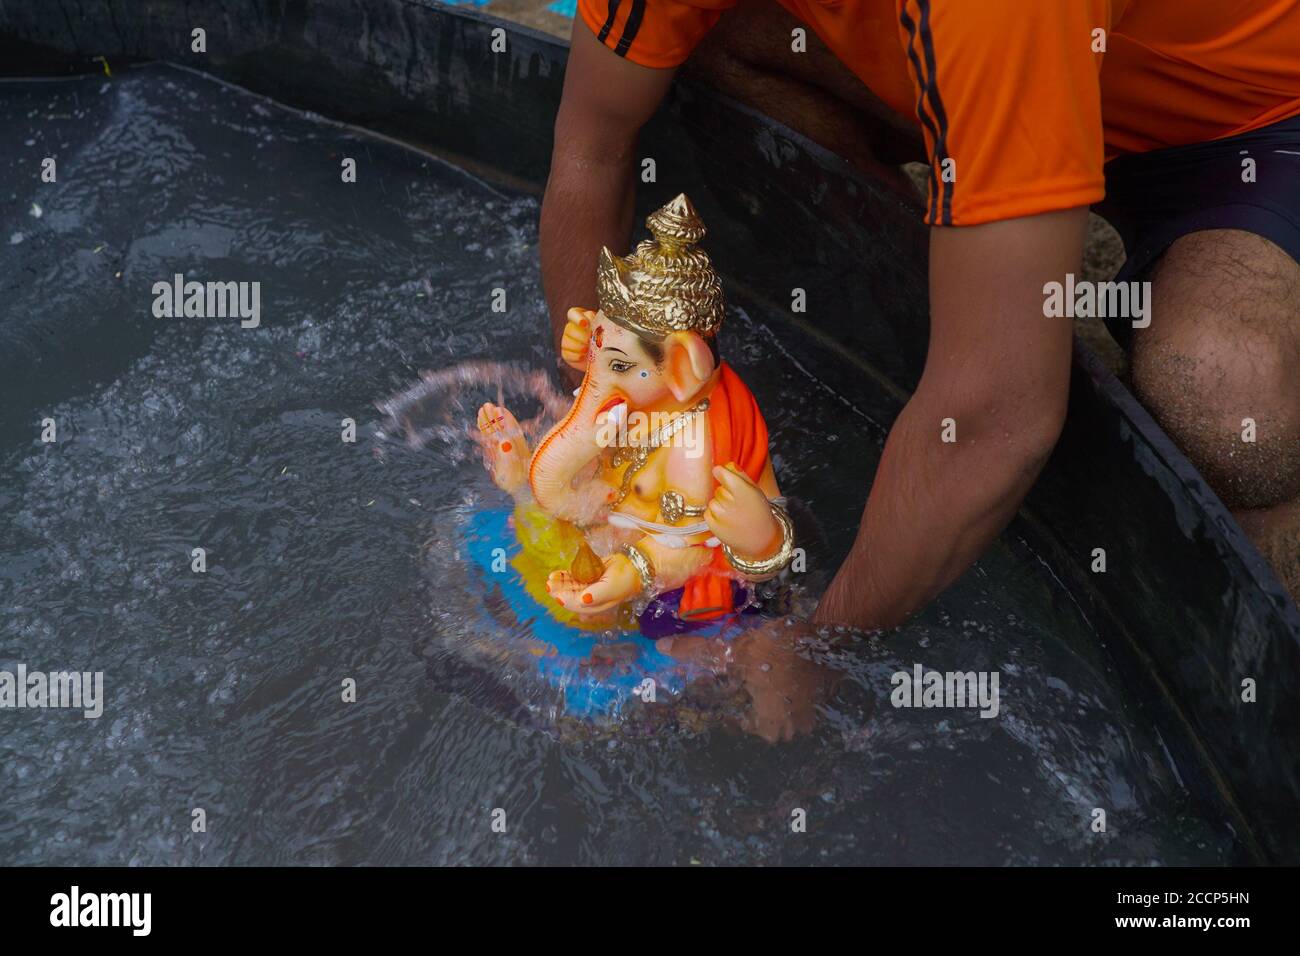 Ganesh idol immersion in covid 19 pandemic restrictions. Ganpati Visarjan In Man Made pond People With Mask -Mumbai, Maharashtra / India. Stock Photo